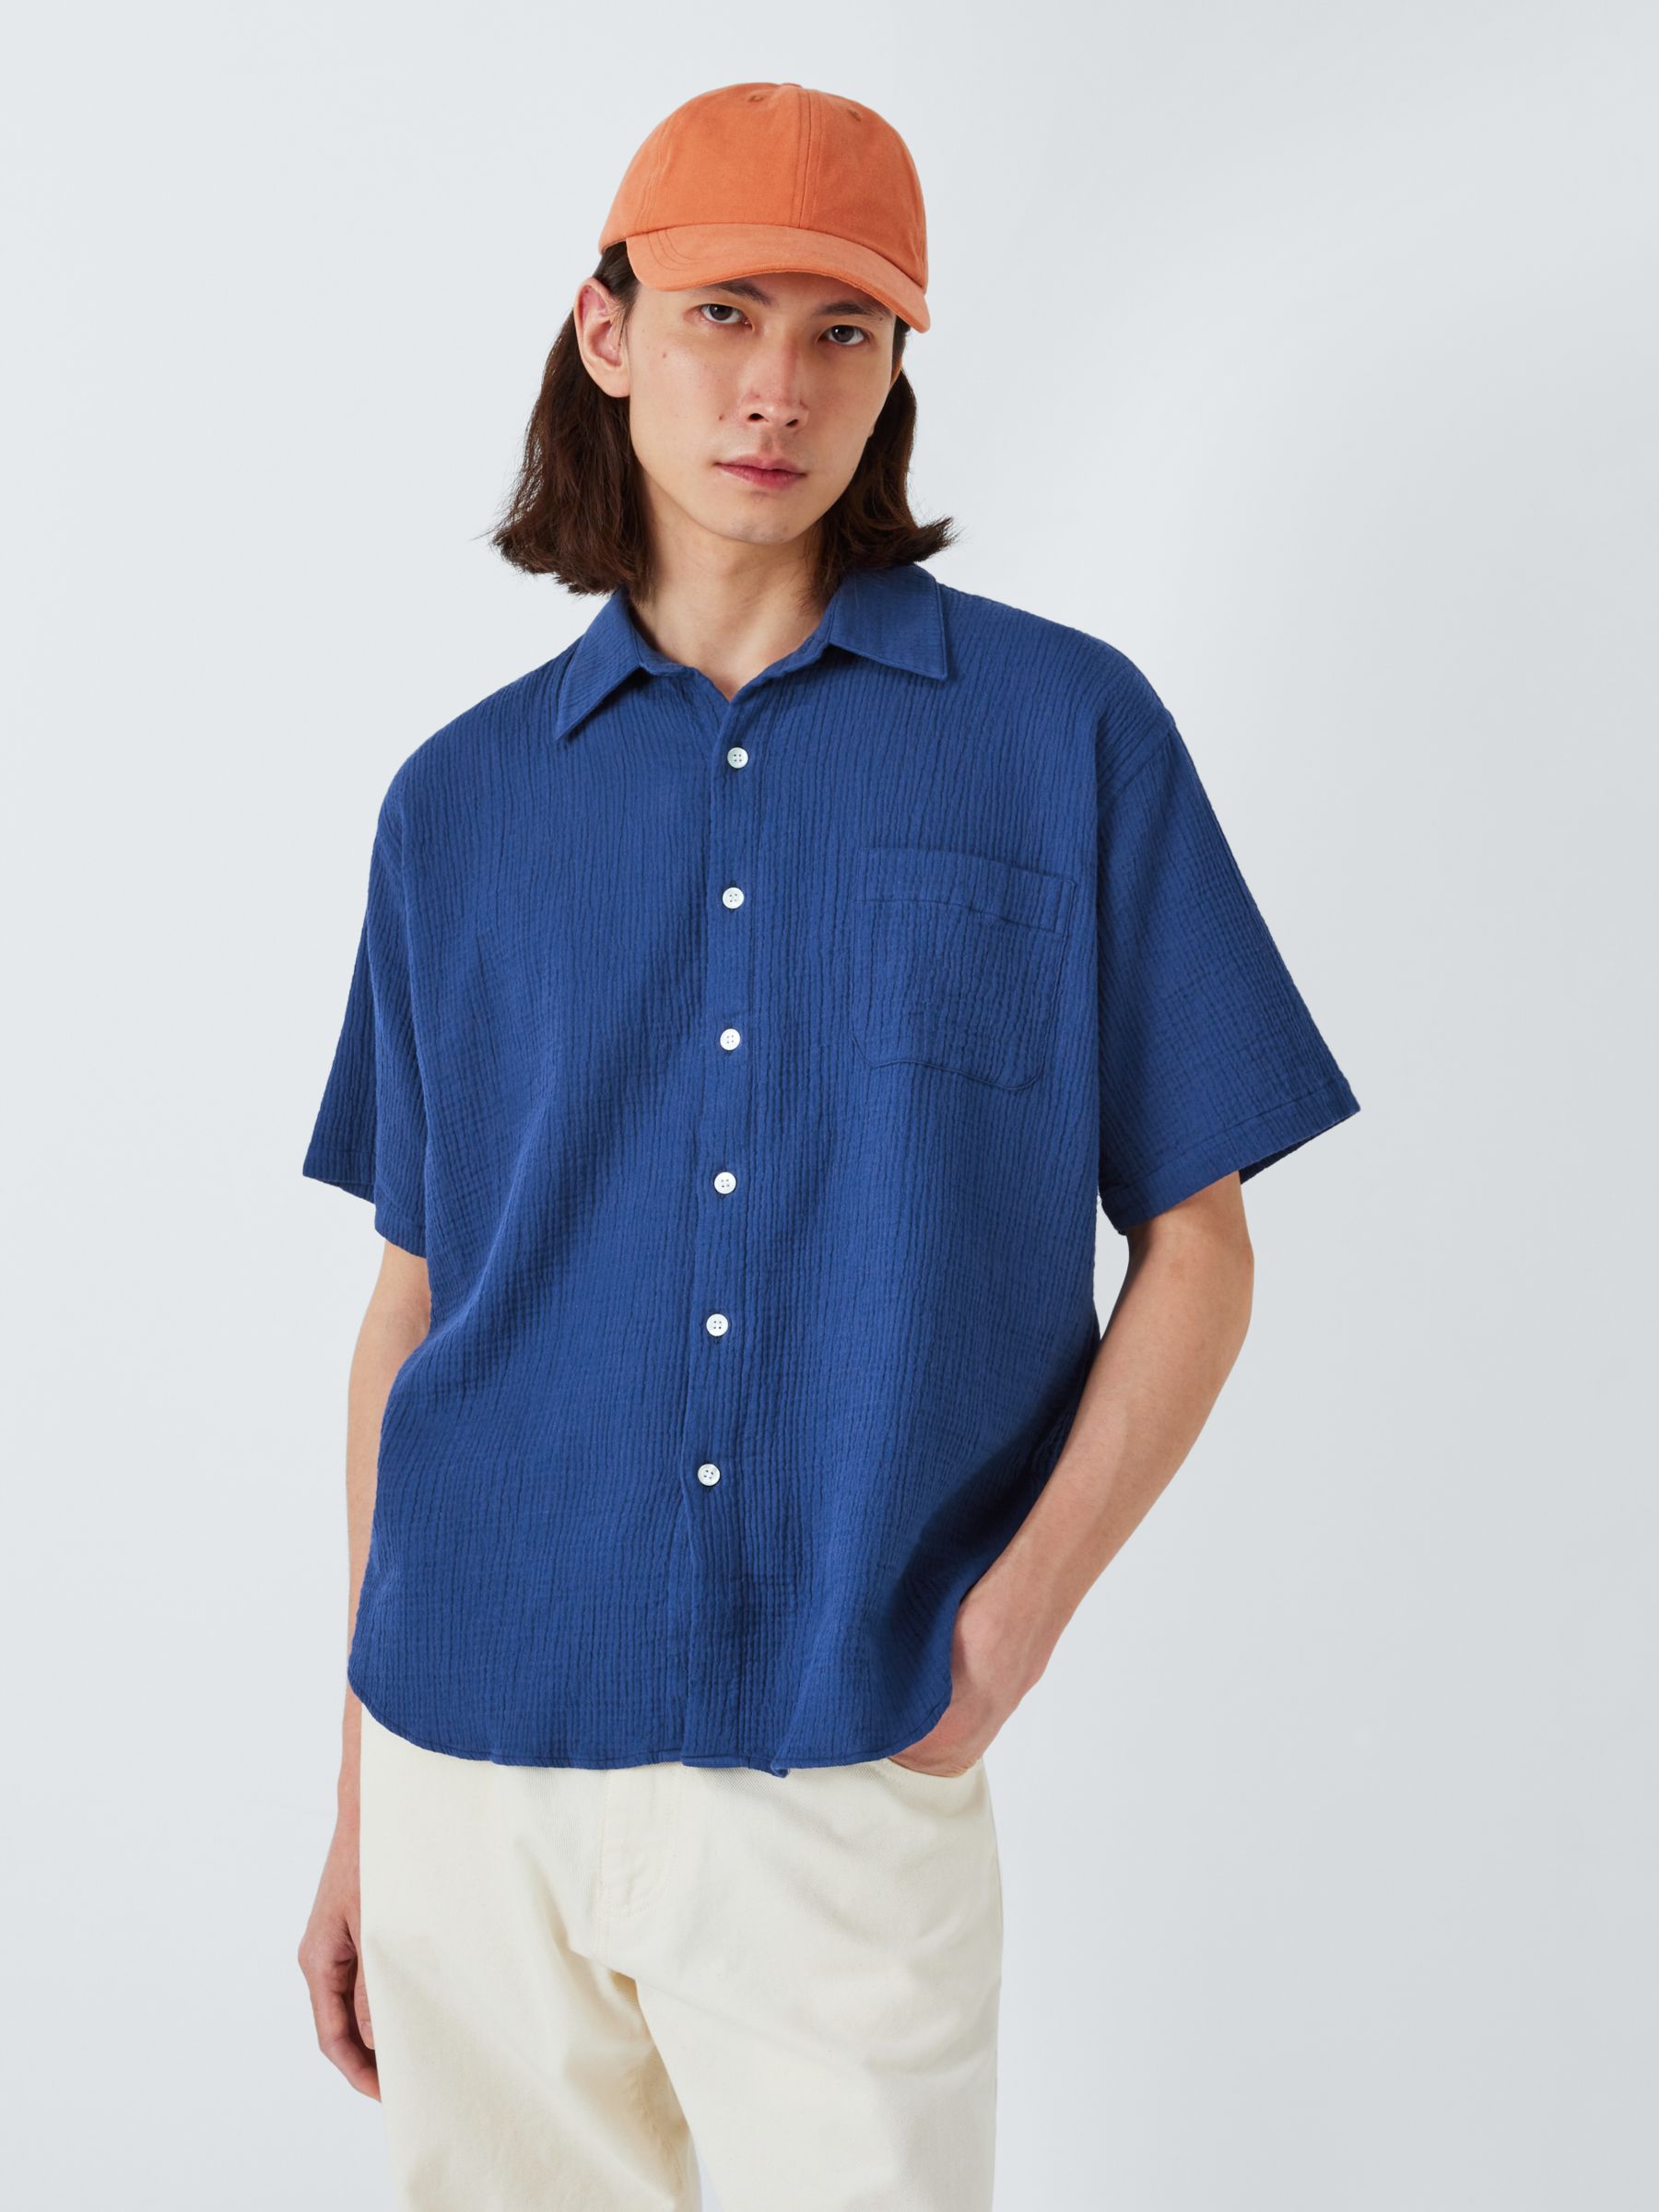 La Paz Grandpa Baggy Short Sleeve Shirt, Blue, L